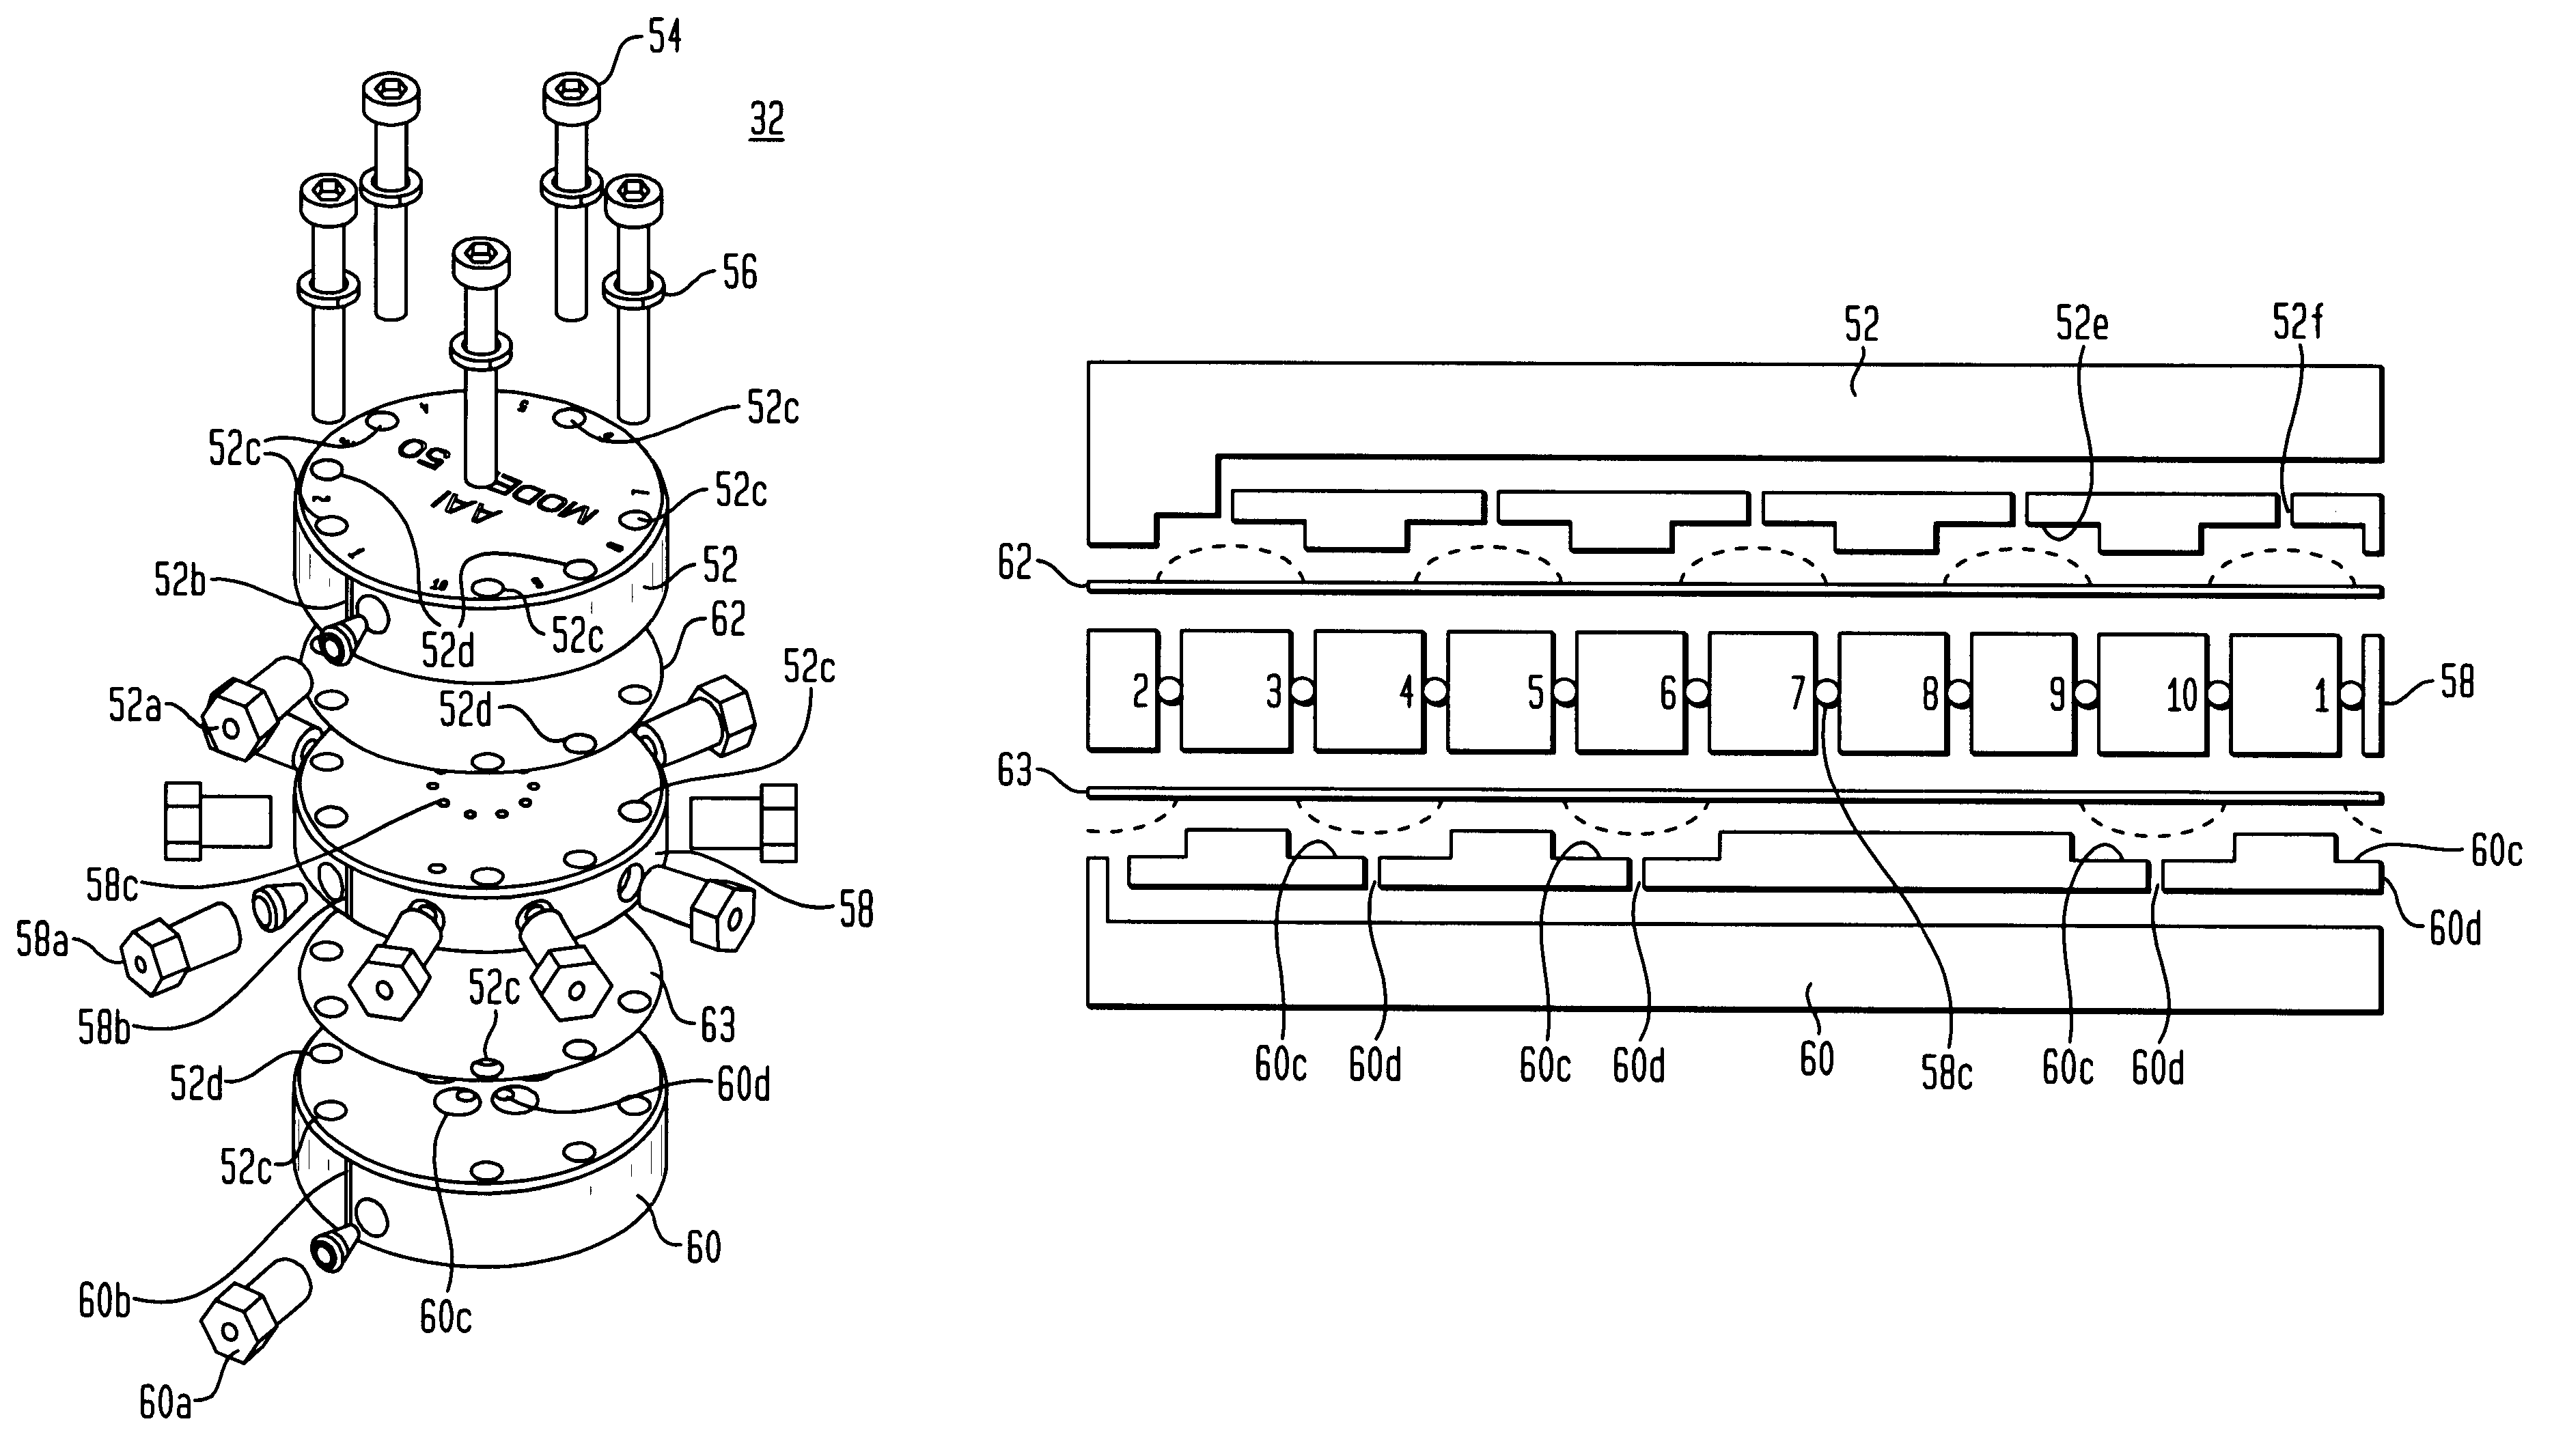 Gas chromatograph sample and column-switching valve